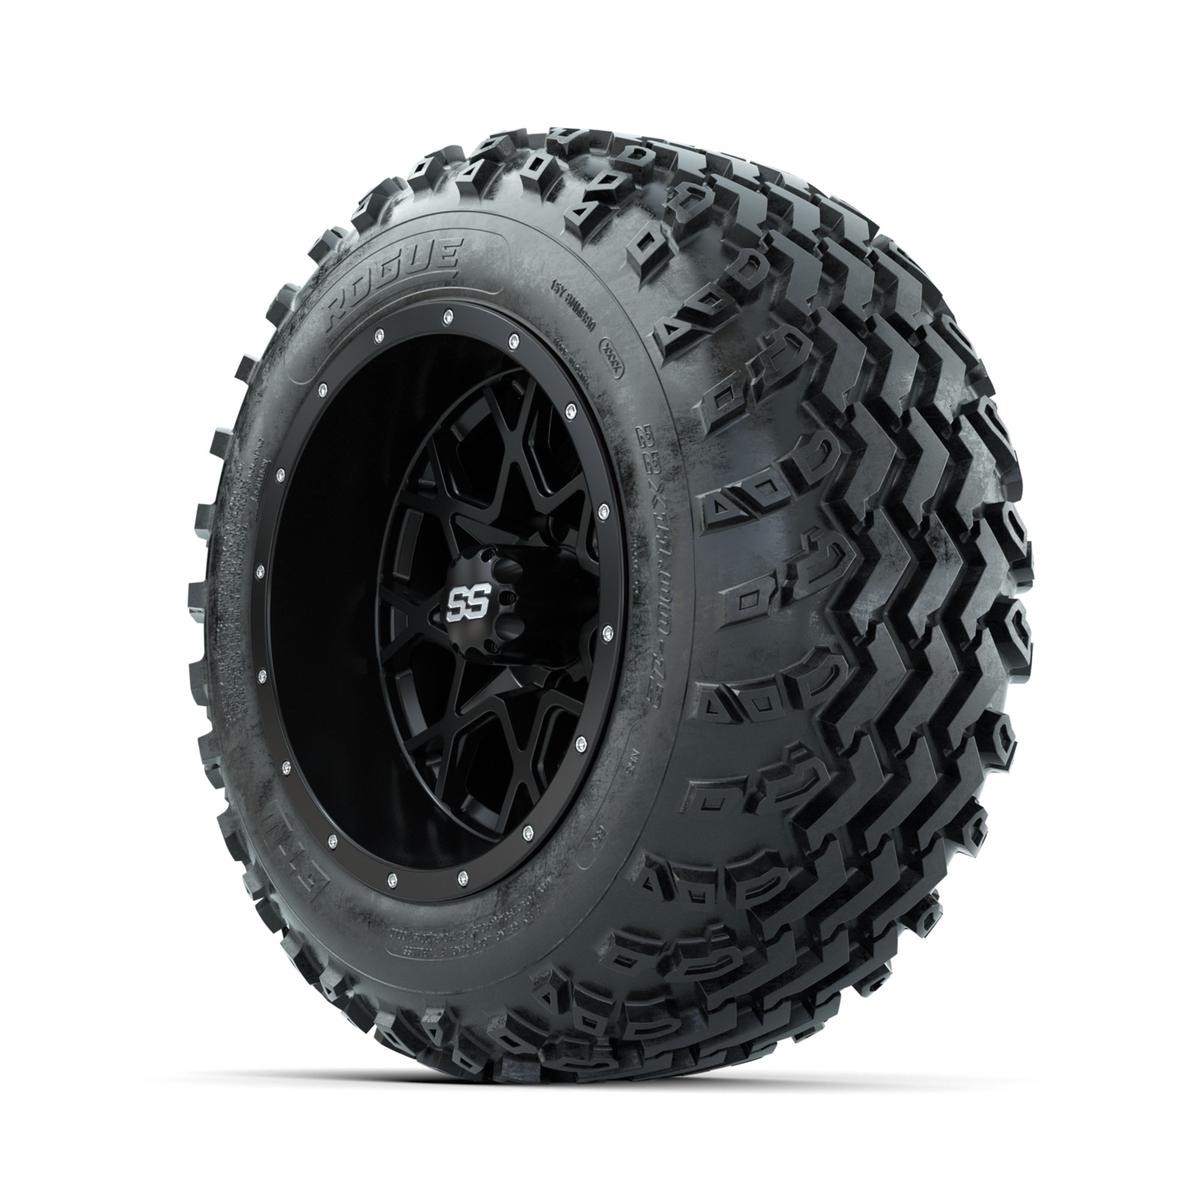 GTW Vortex Matte Black 12 in Wheels with 22x11.00-12 Rogue All Terrain Tires – Full Set